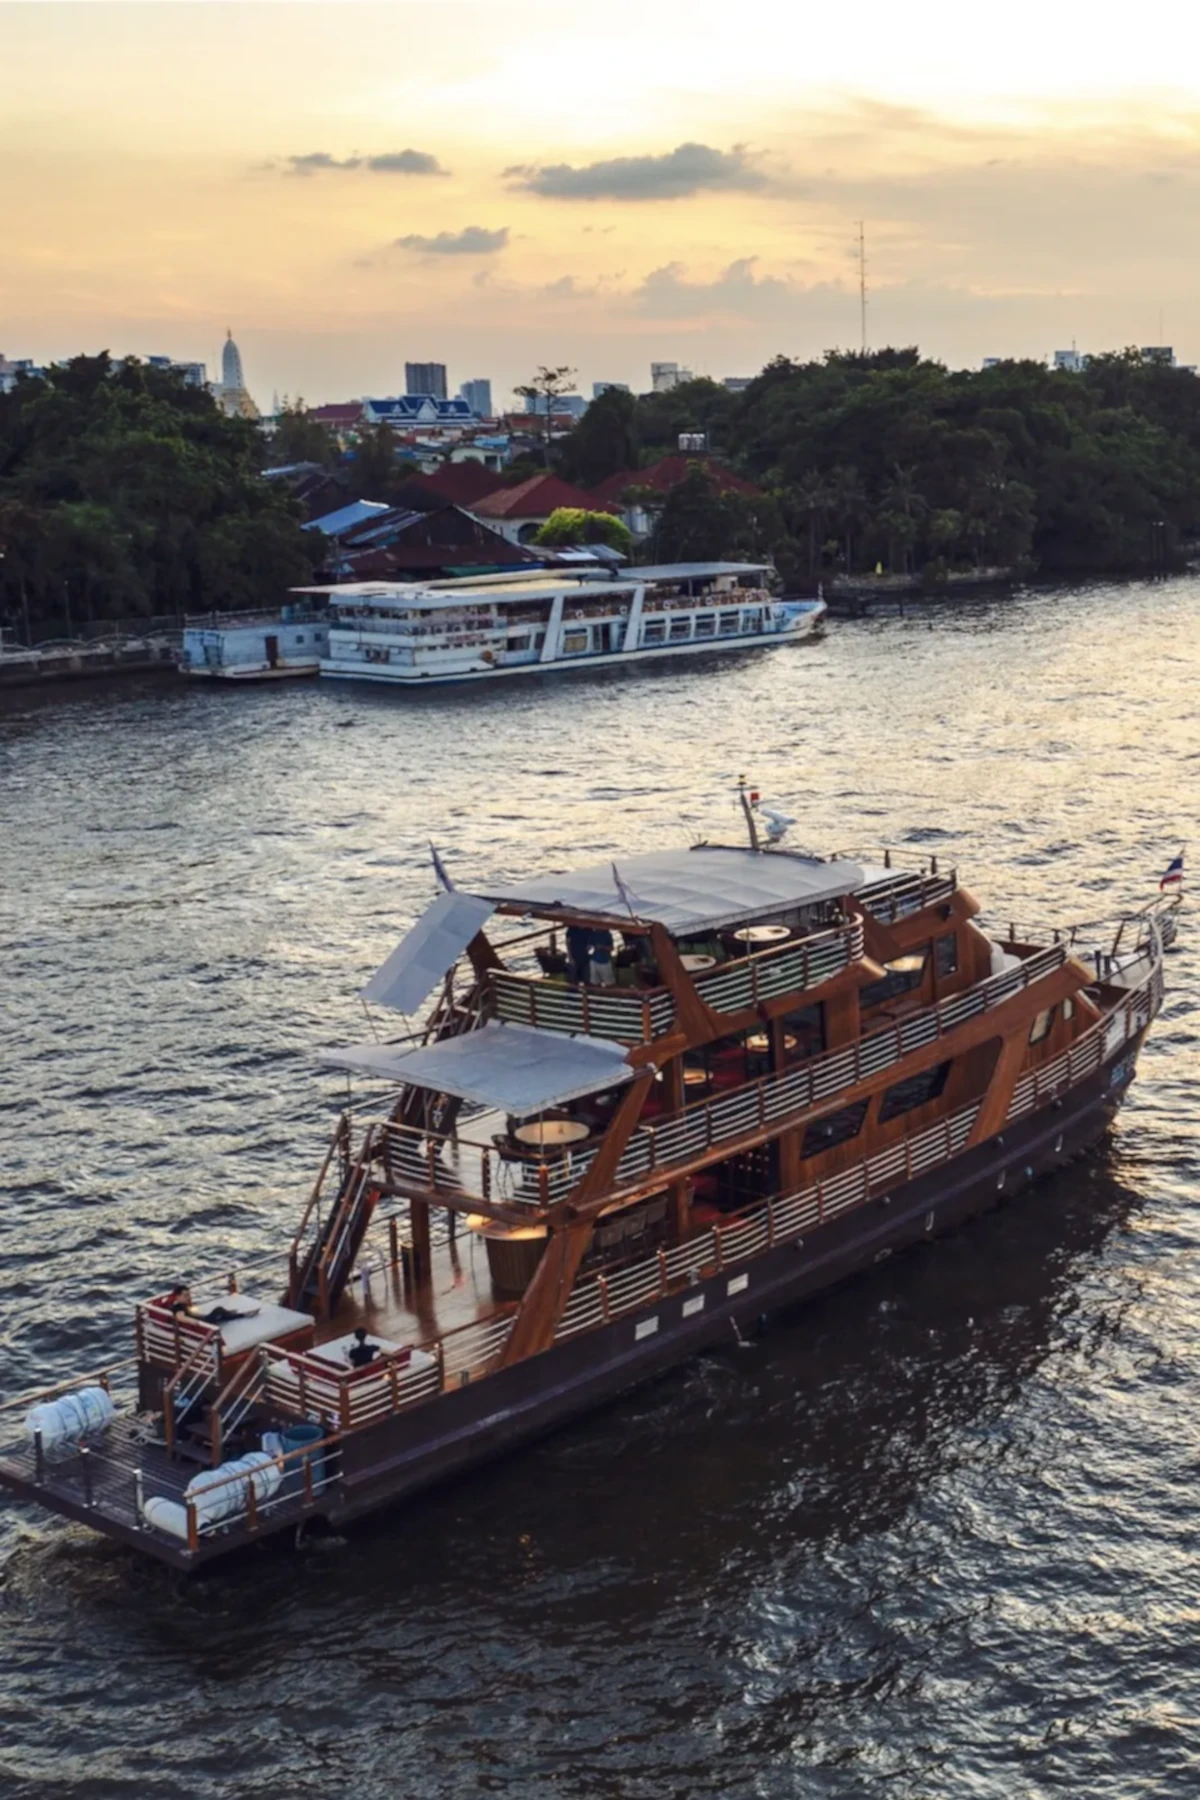 Pruek dinner cruise boat gracefully sailing along the Chao Phraya river in Bangkok